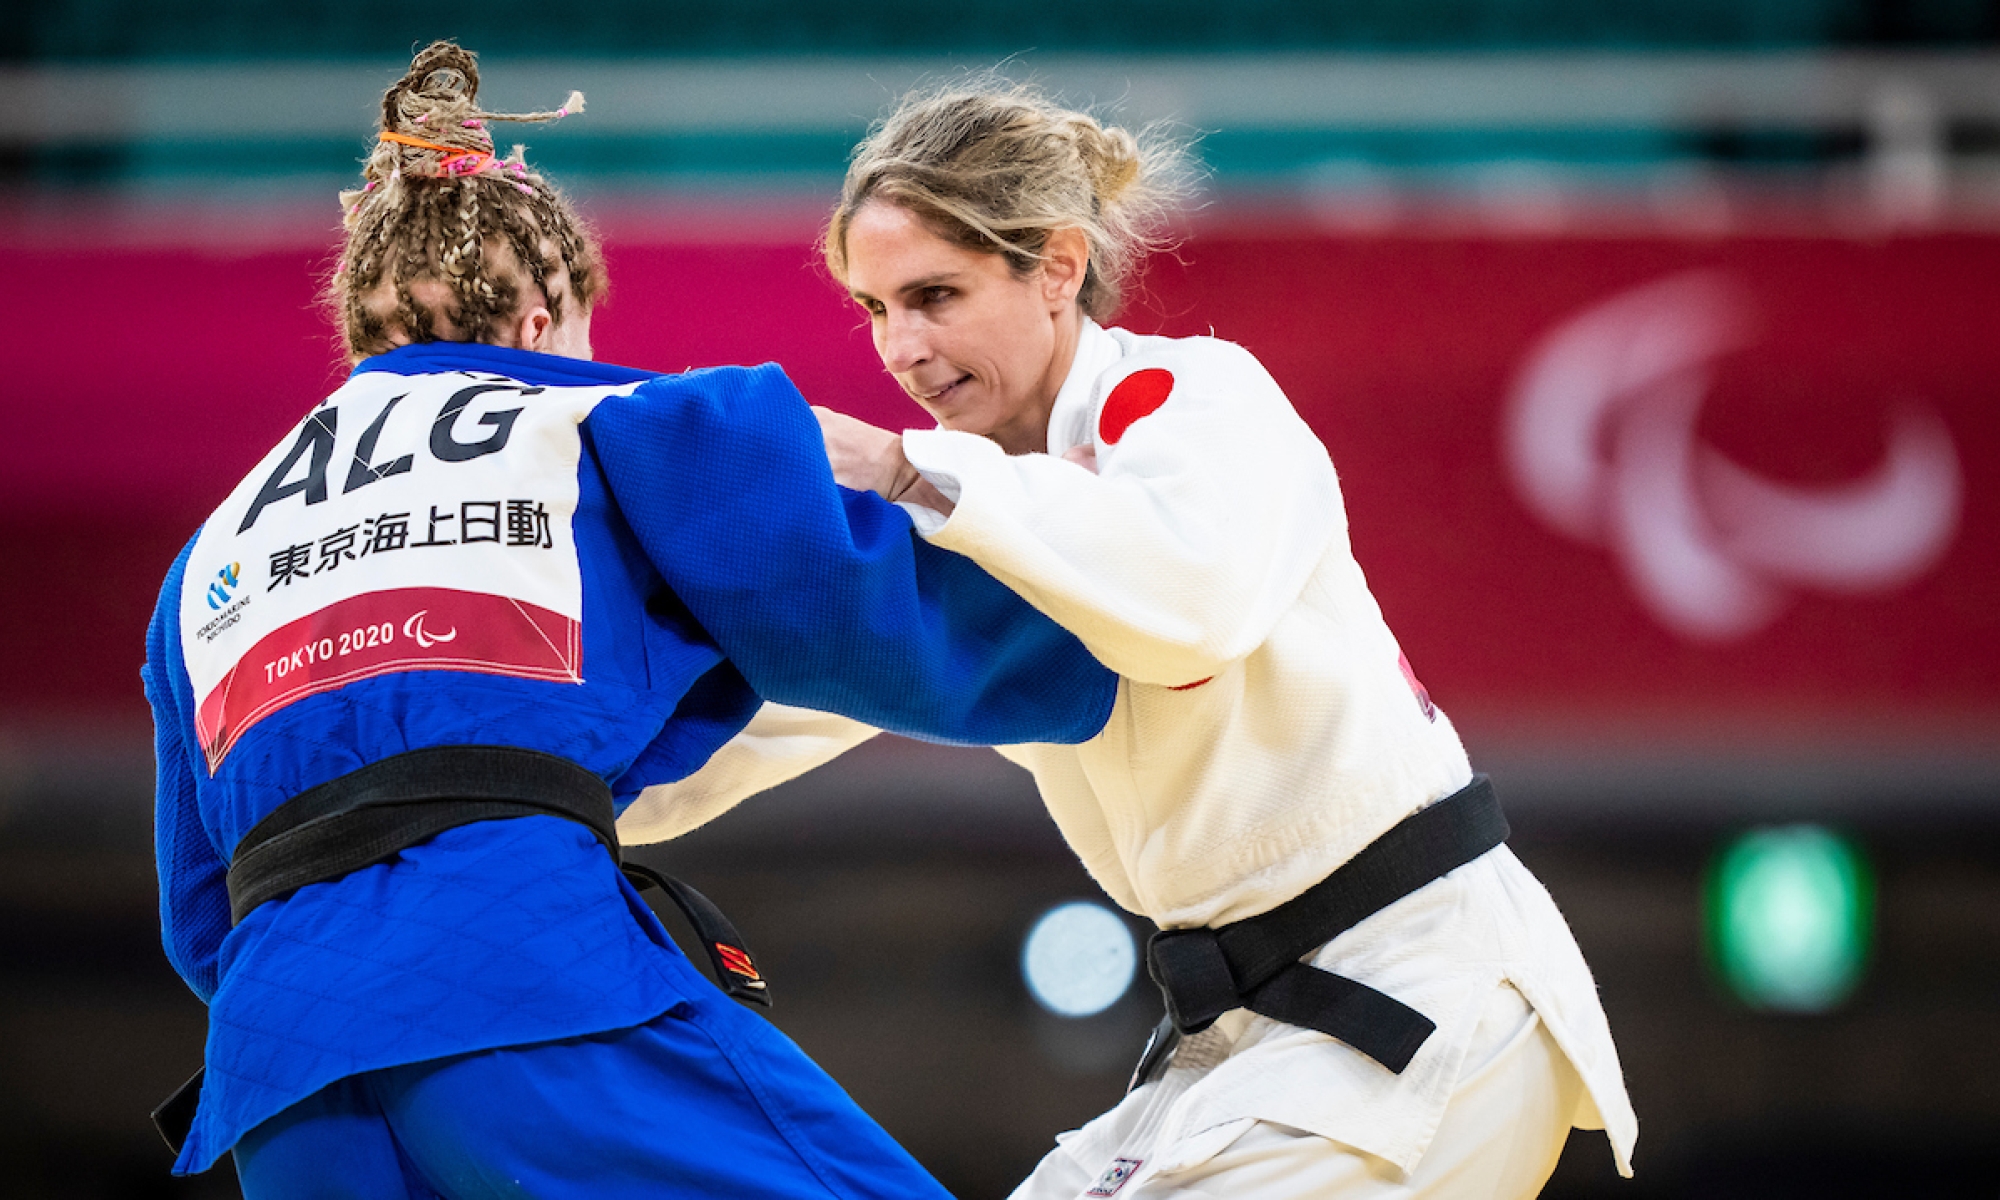 Priscilla Gagne in Para judo